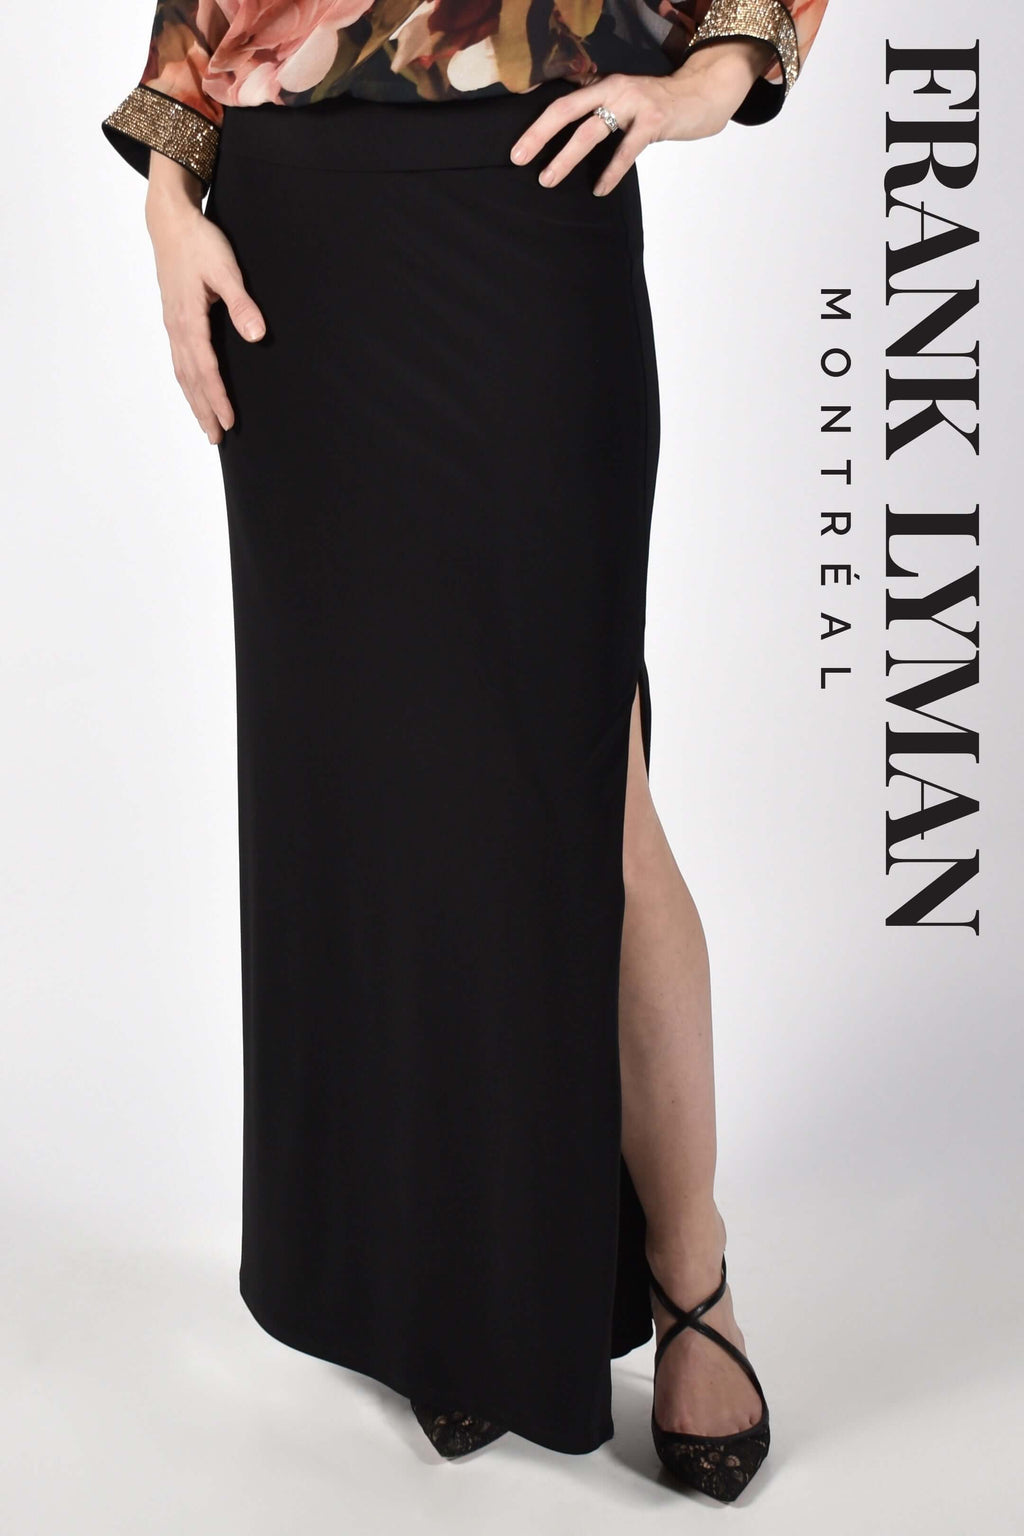 Frank Lyman Long Jersey Skirt in Black 219011 Frank LymanBlack, formal, Frank Lyman, long skirt, Lyman, Lyman by Frank Lyman, skirt